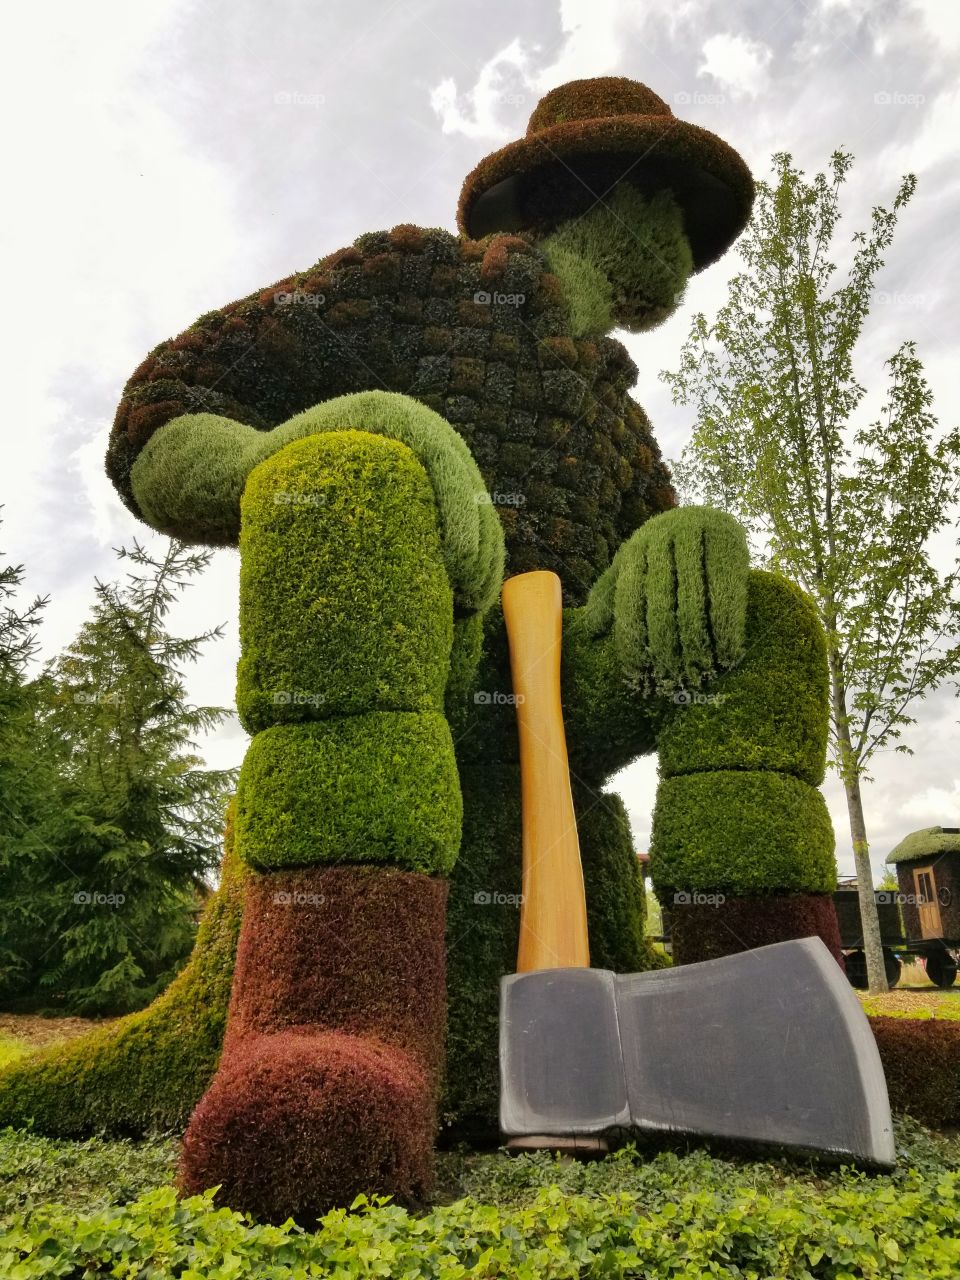 Lumberjack garden art